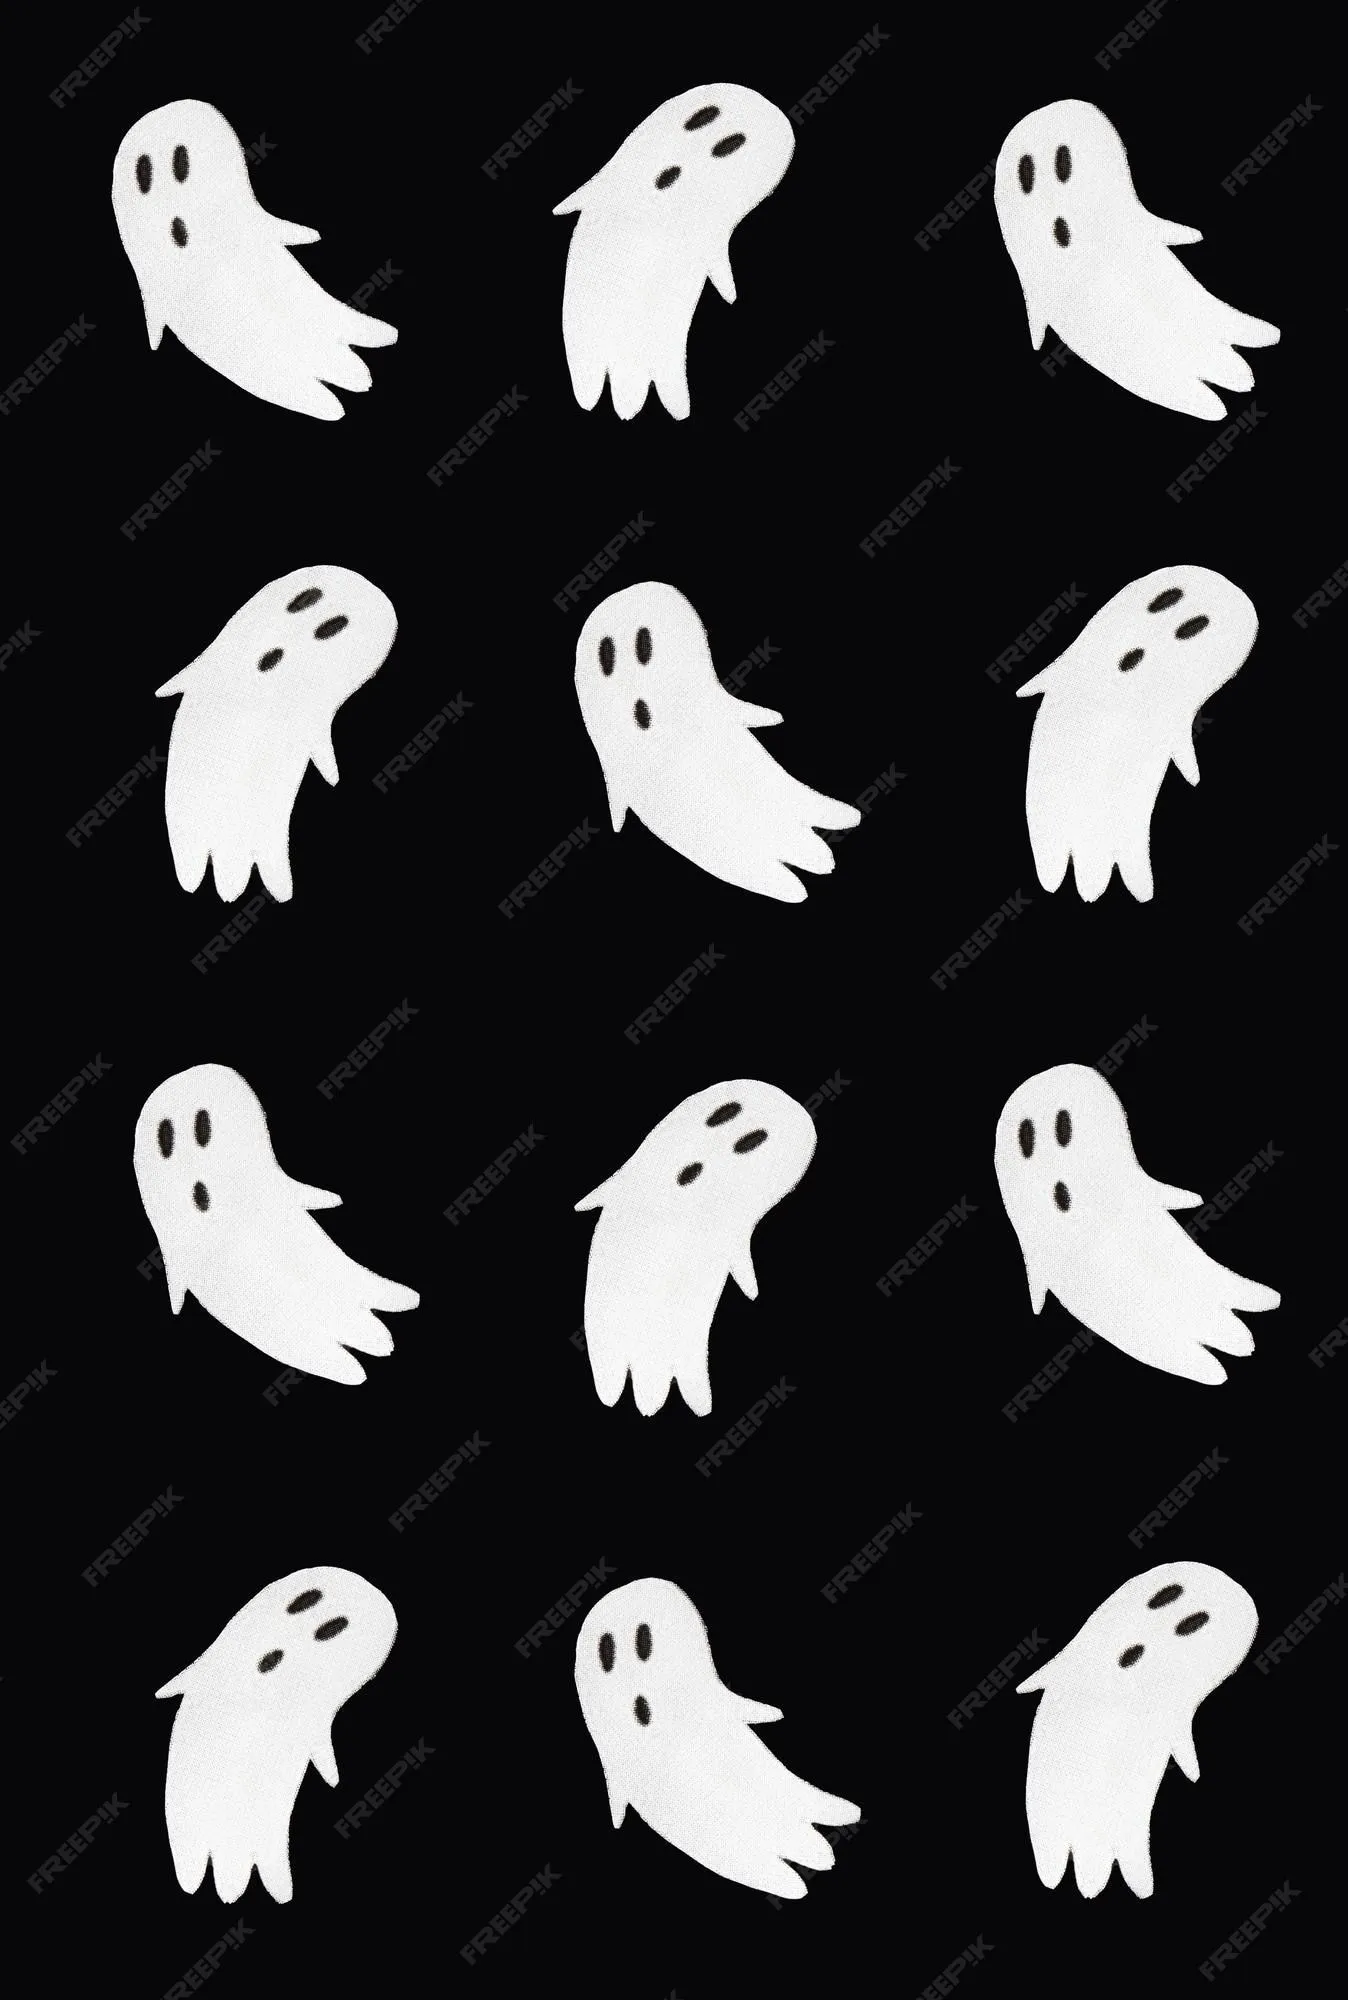 Patrón de terror hecho de fantasmas sobre fondo negro idea espeluznante  concepto de halloween o santa muerte | Foto Premium